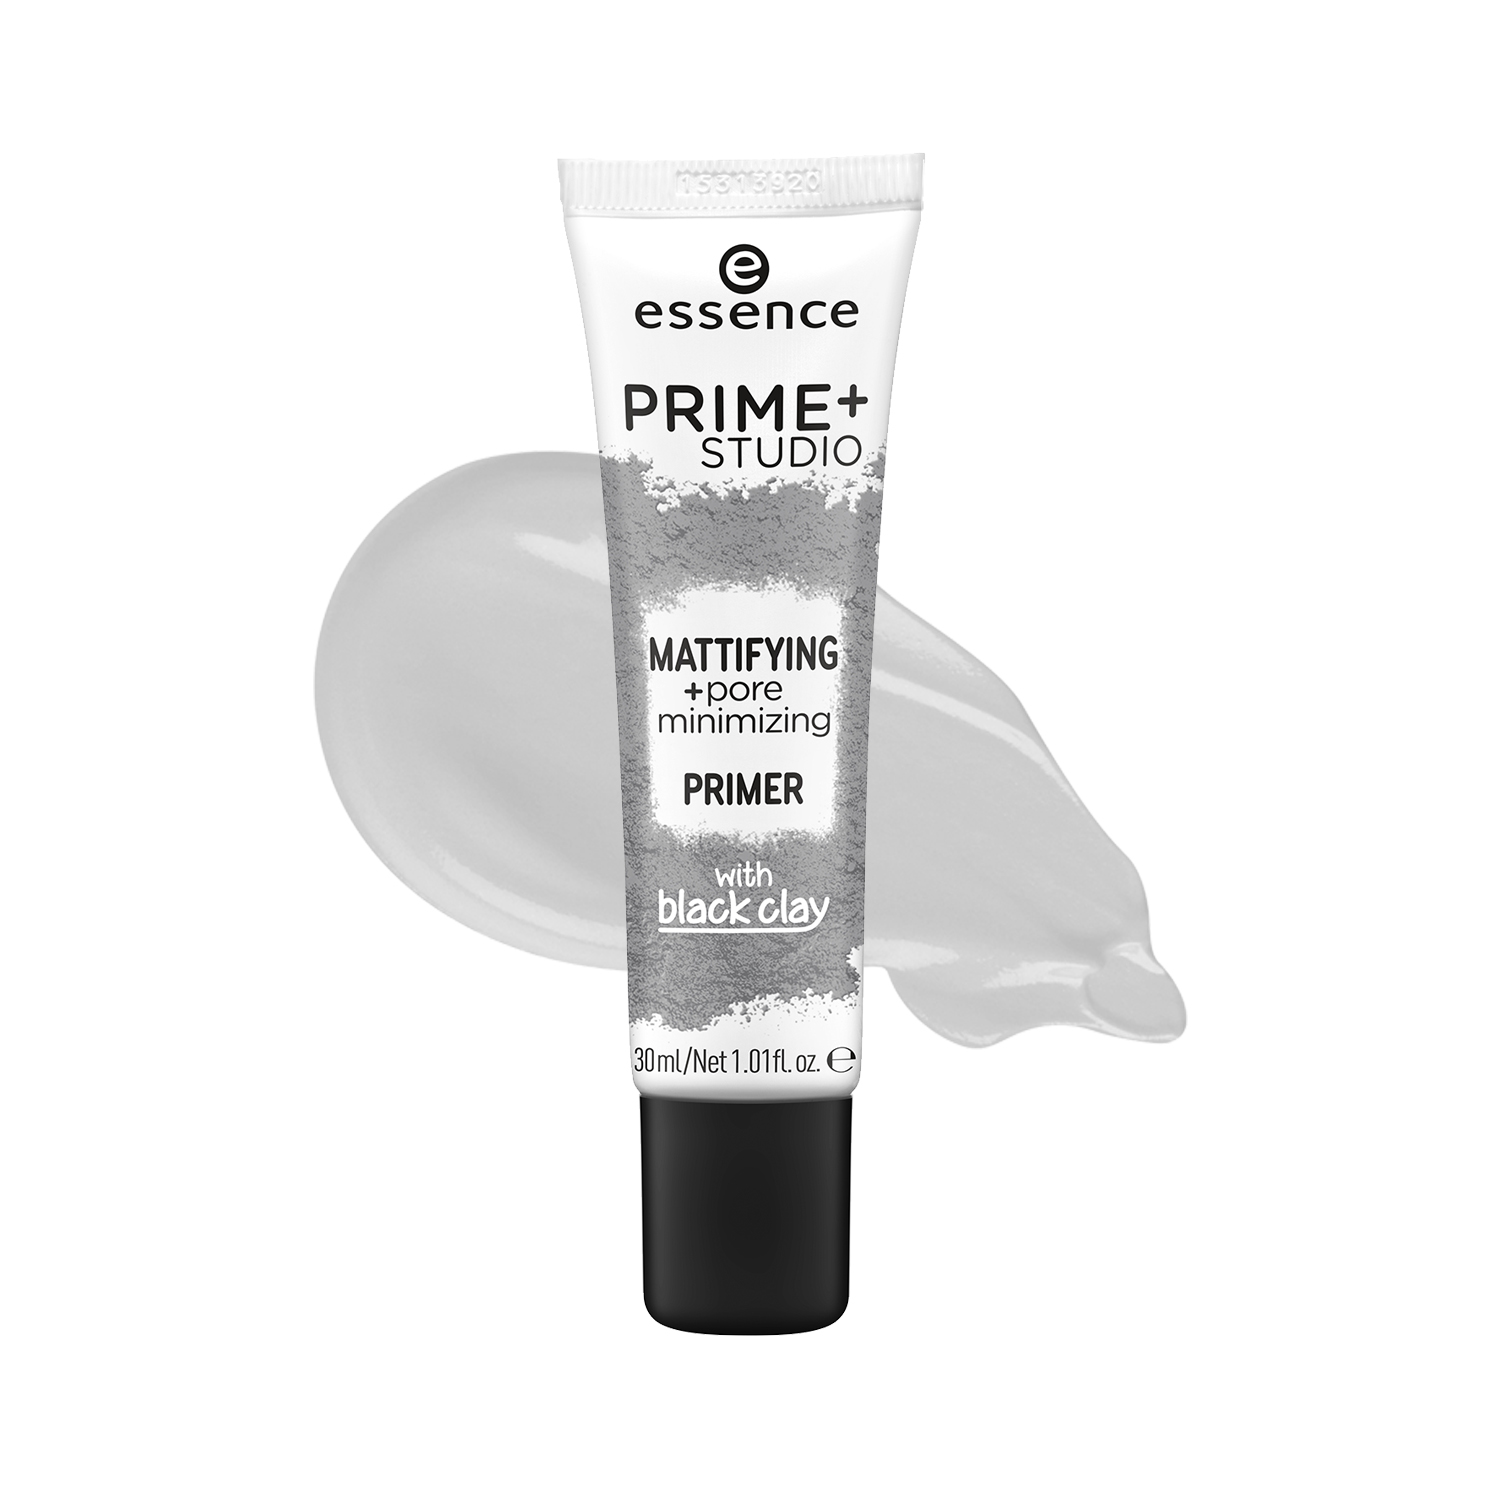 essence prime+ studio mattifying + pore minimizing primer - เอสเซนส์ไพรม์+สตูดิโอแมตติฟายอิ้ง+พอร์มินิไมซิ่งไพรม์เมอร์